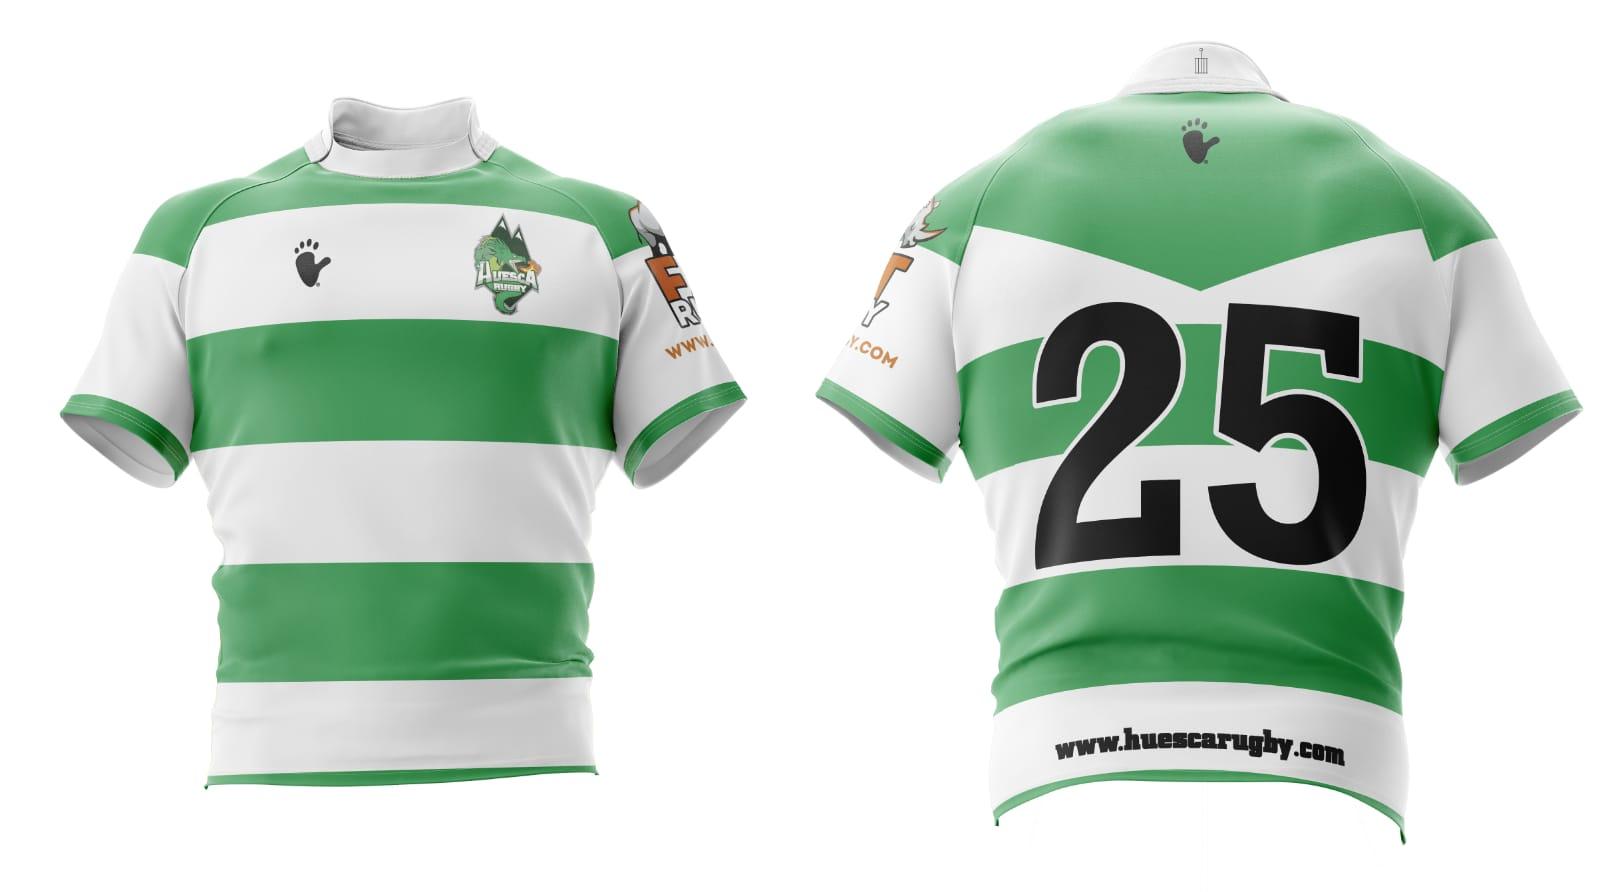 Camiseta Juego Huesca Rugby - Talla XL